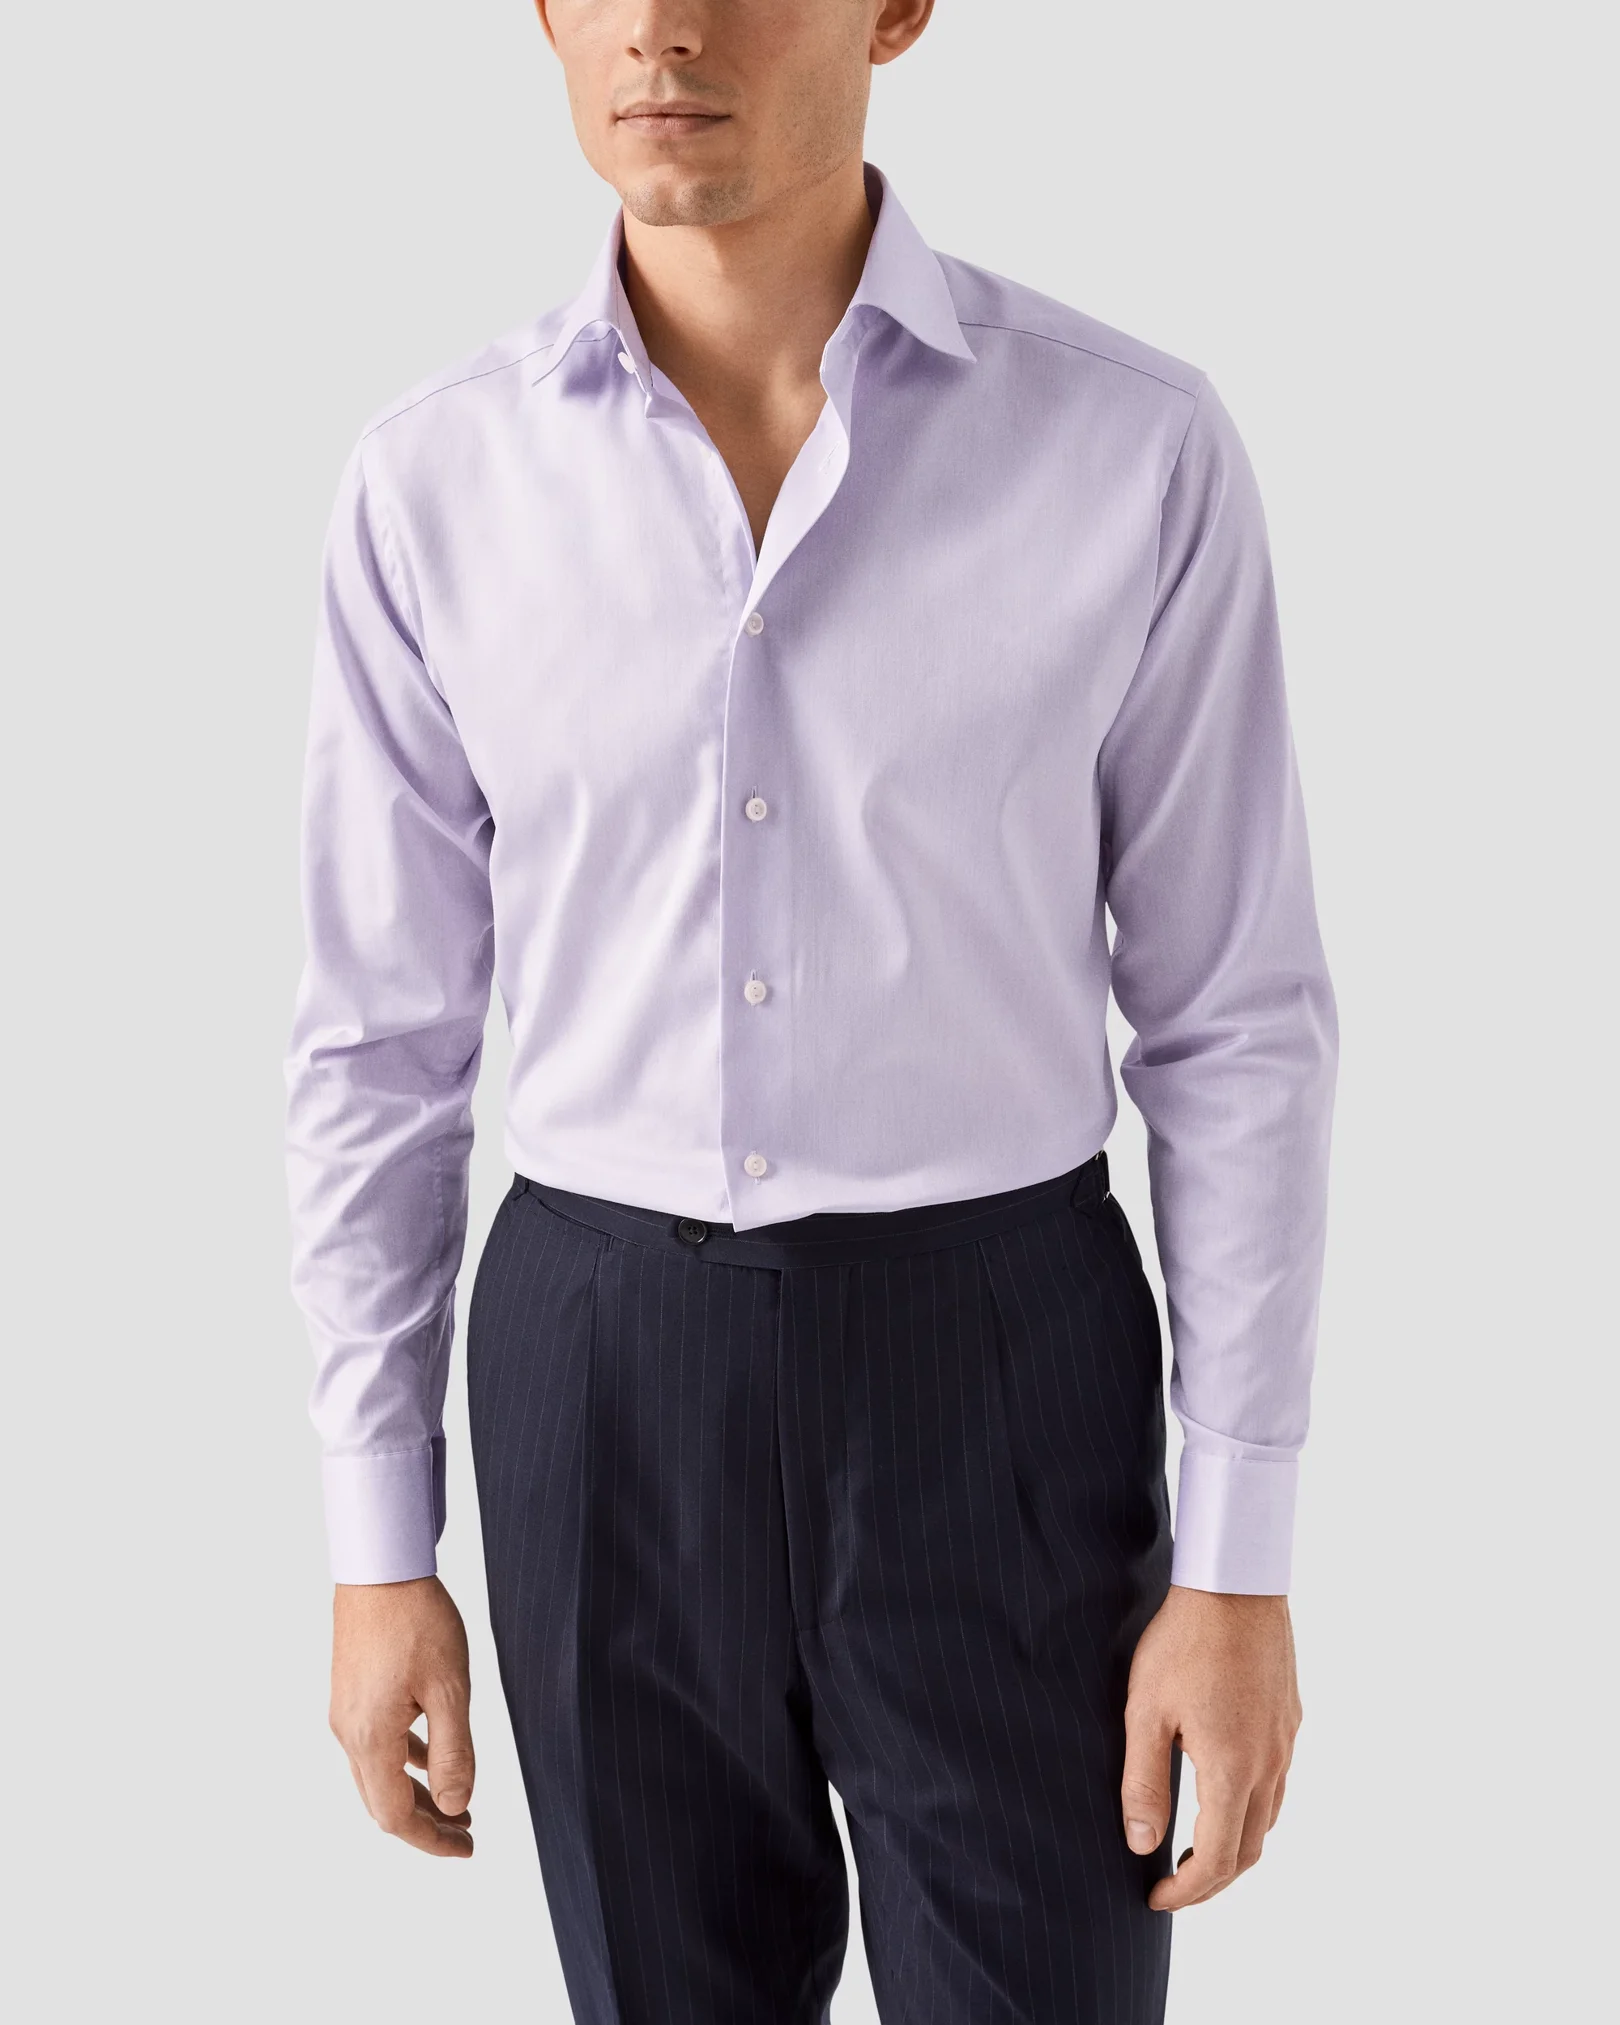 Eton - purple shirt signature twill